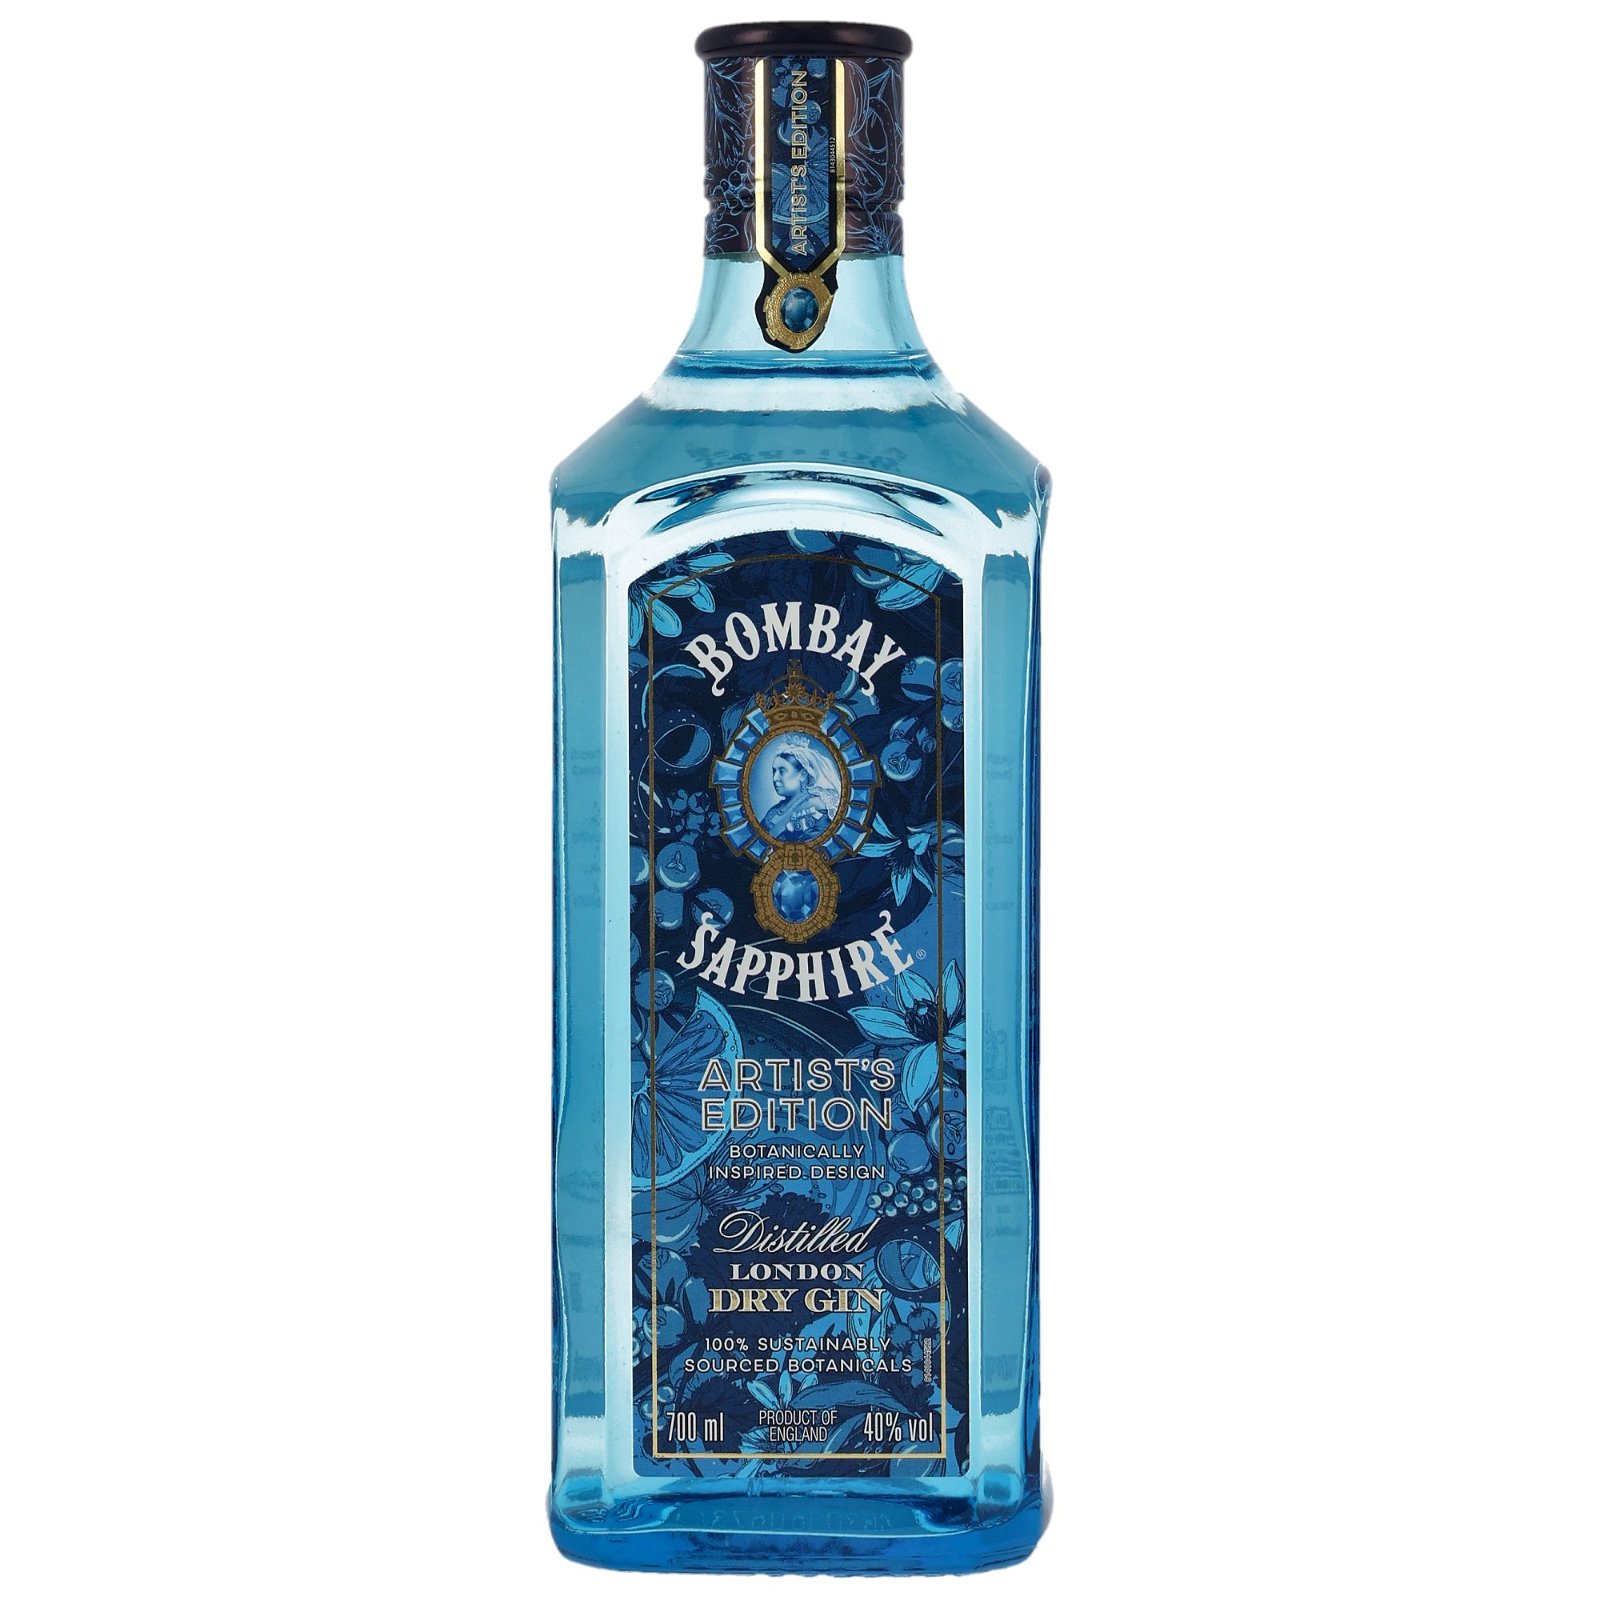 Bombay Sapphire London Dry Gin Artist's Edition